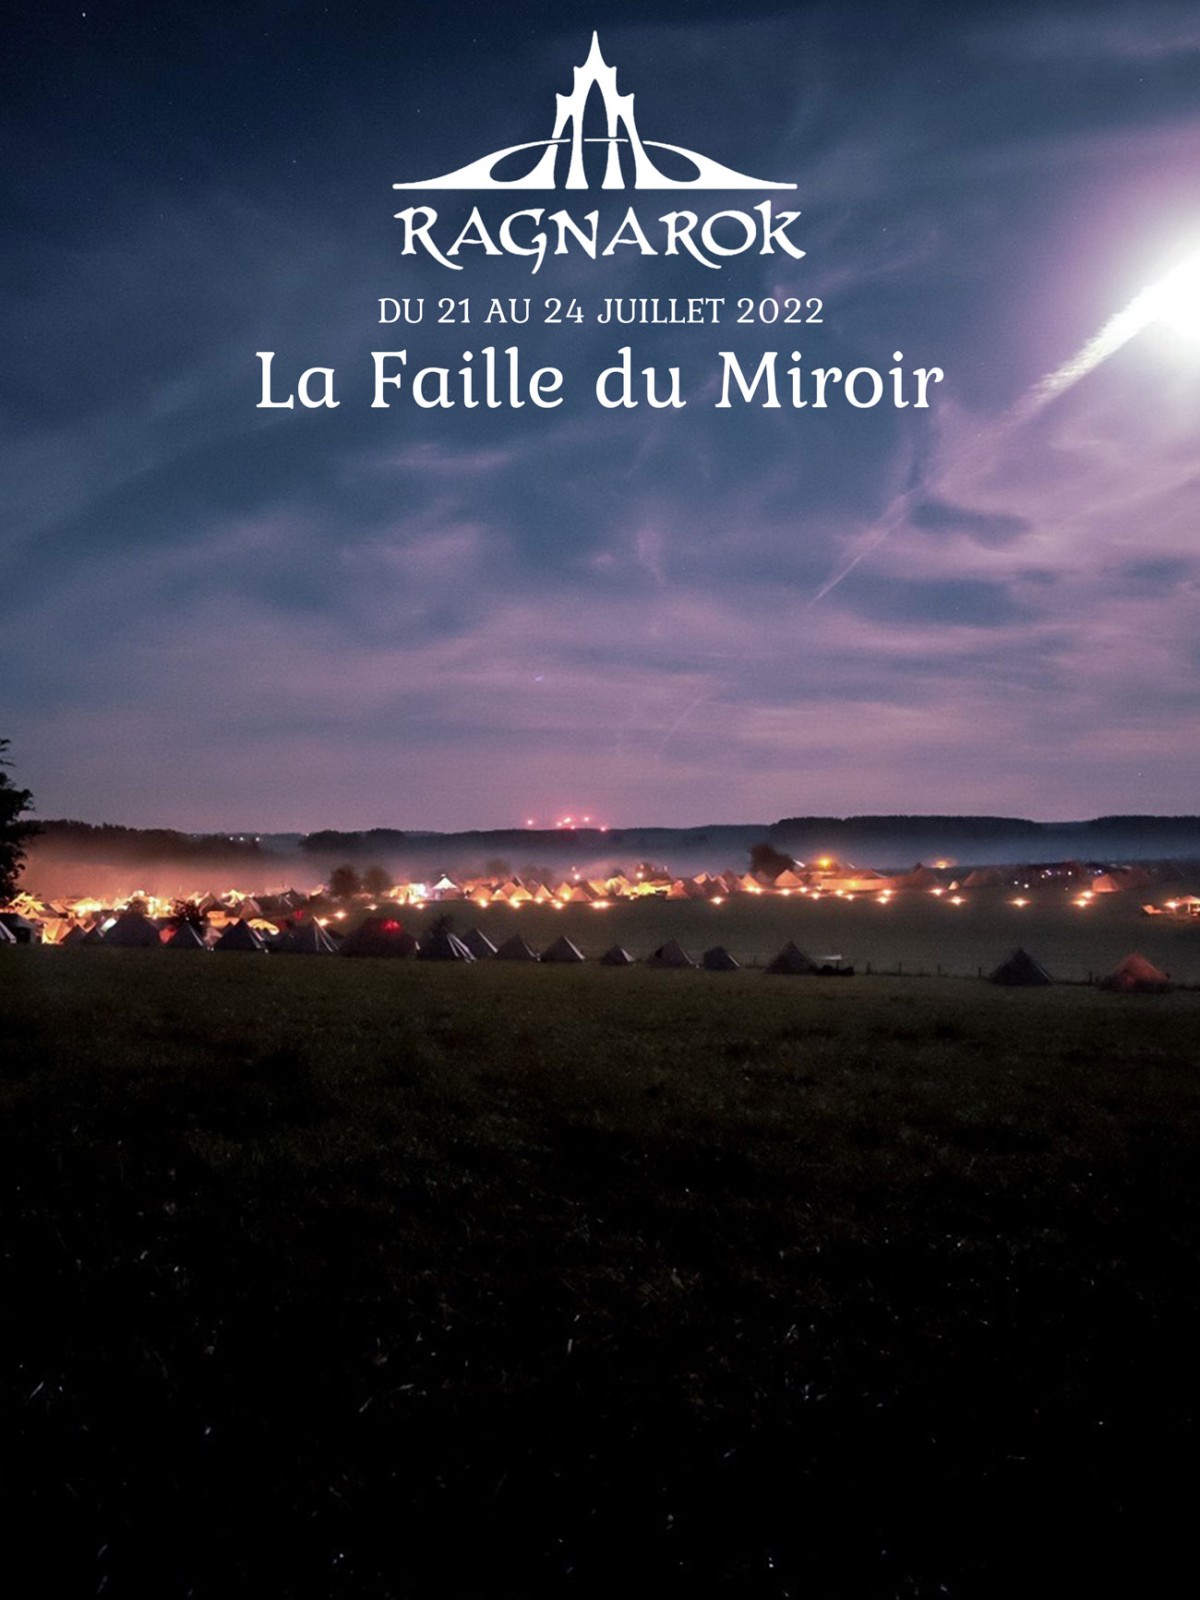 Ragnarok 2022 - La Faille du miroir